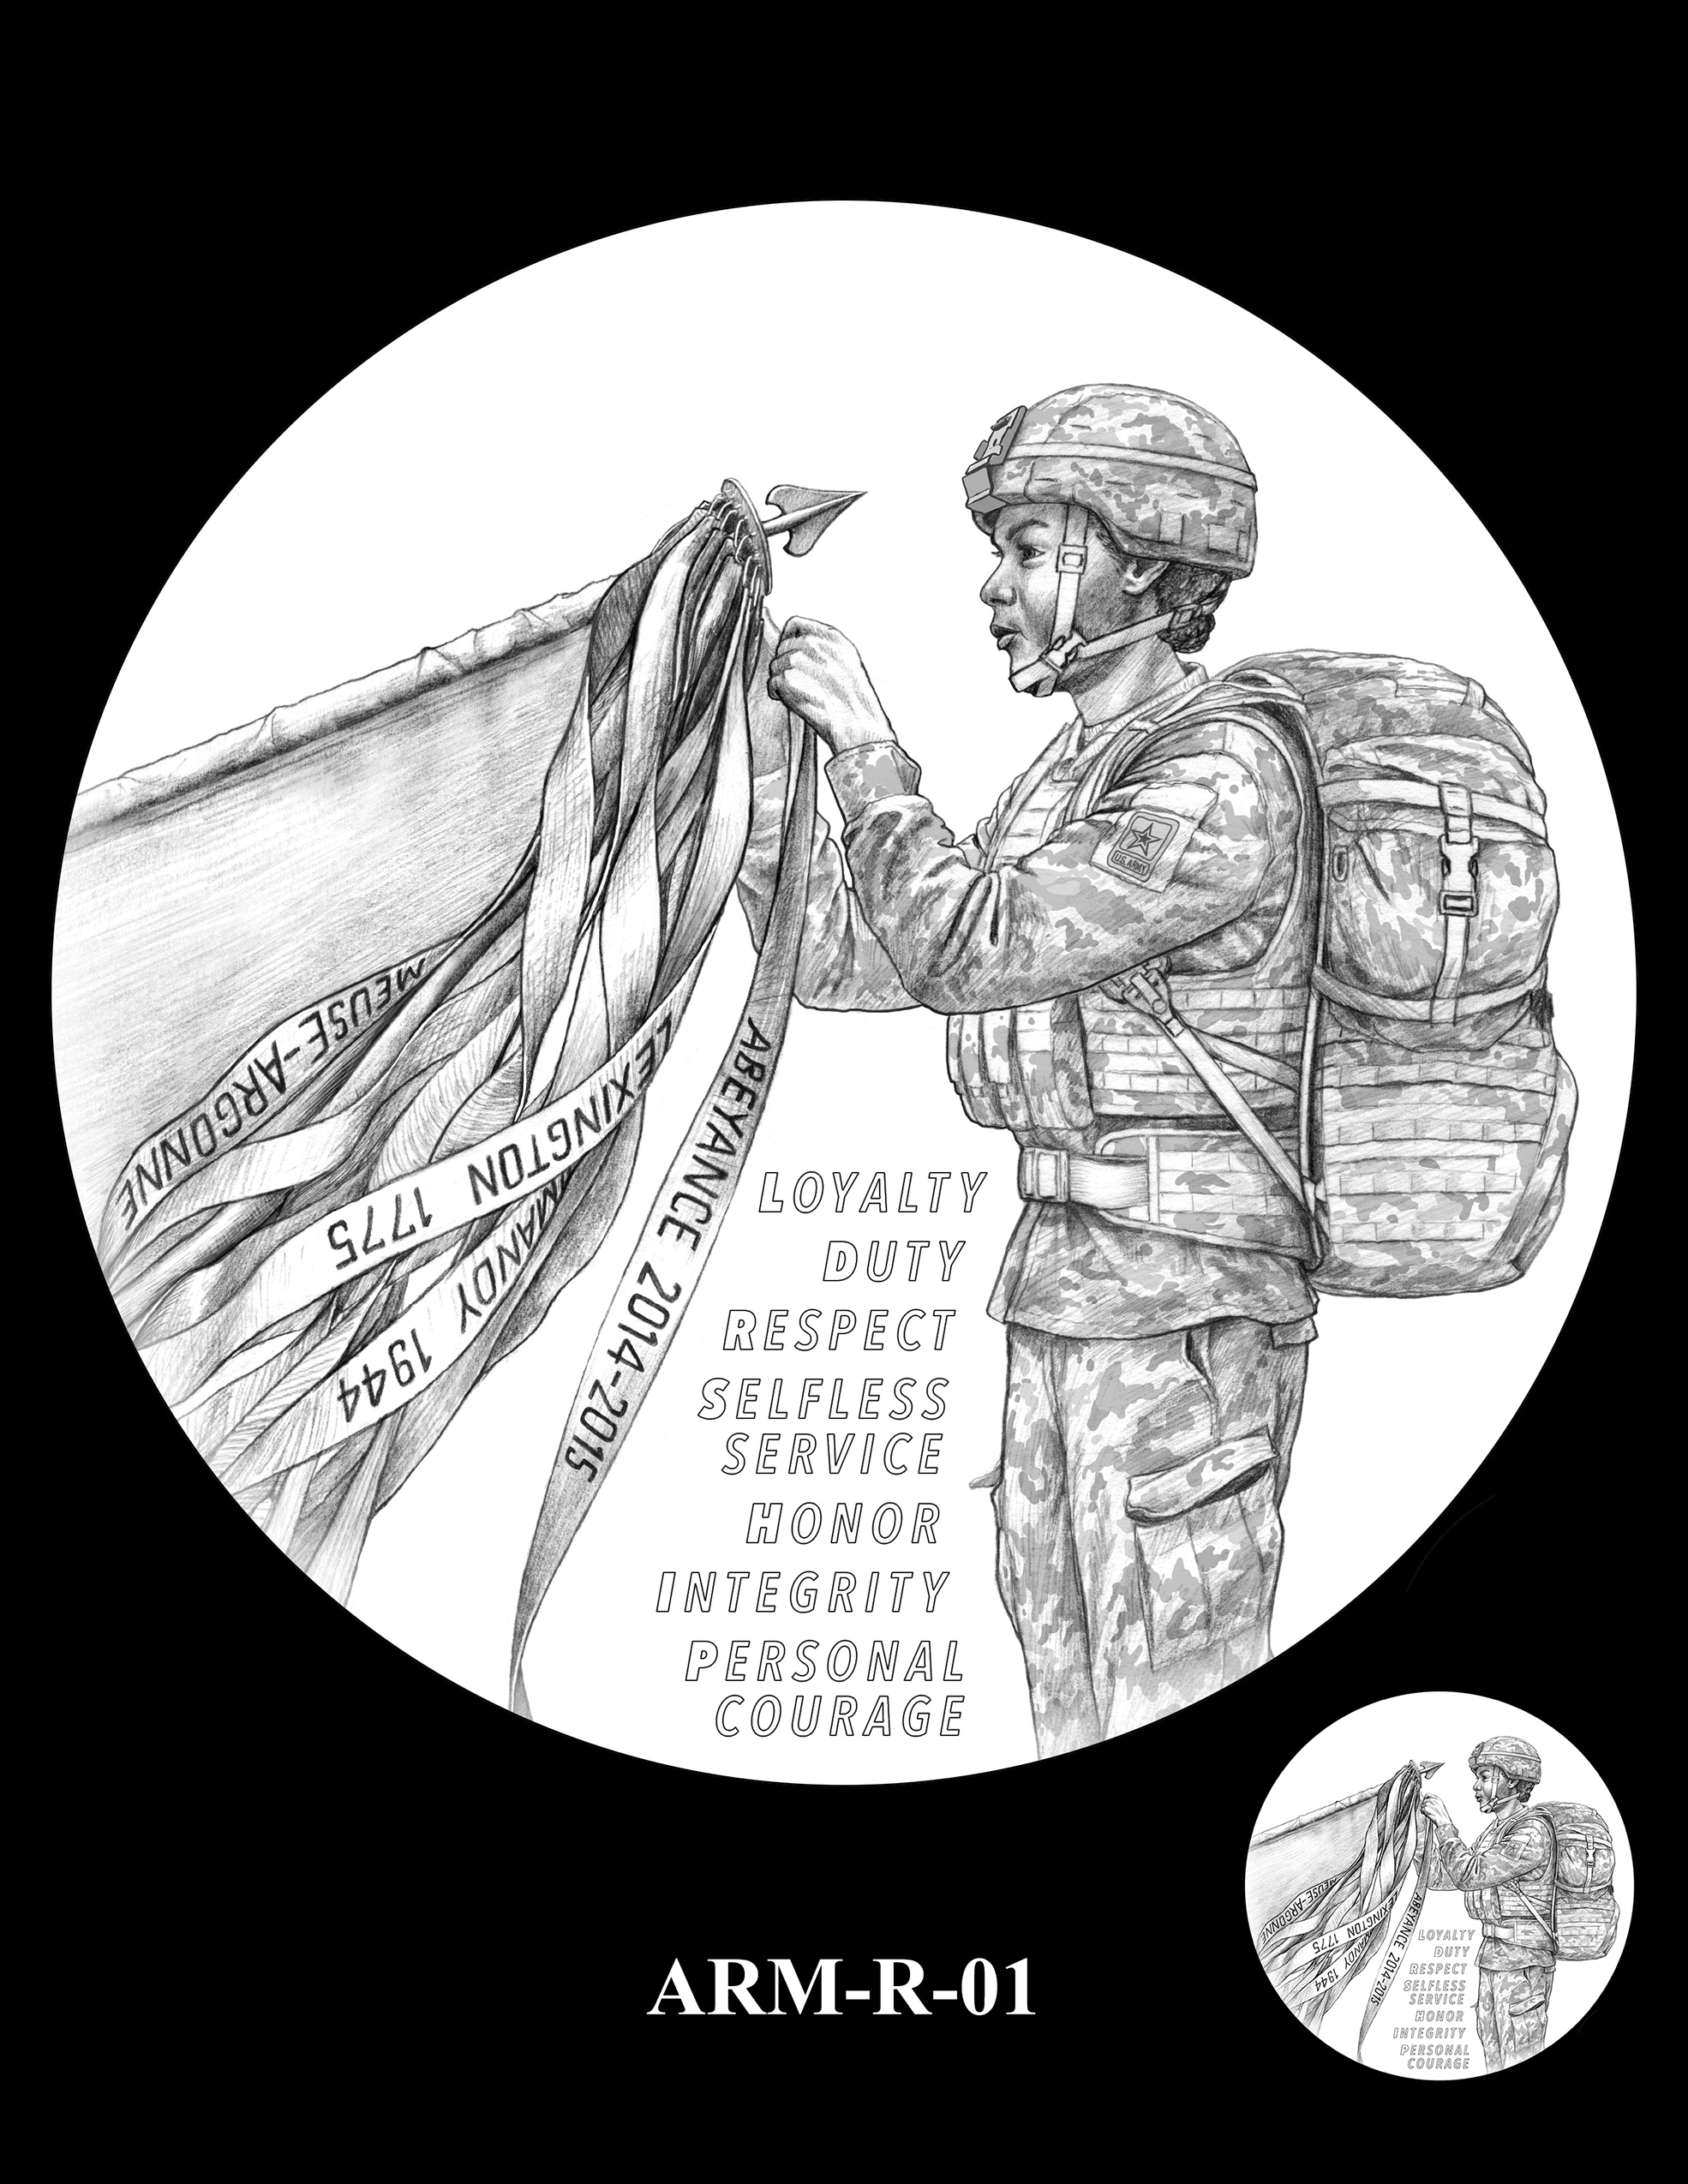 ARM-R-01 -- United States Army Silver Medal